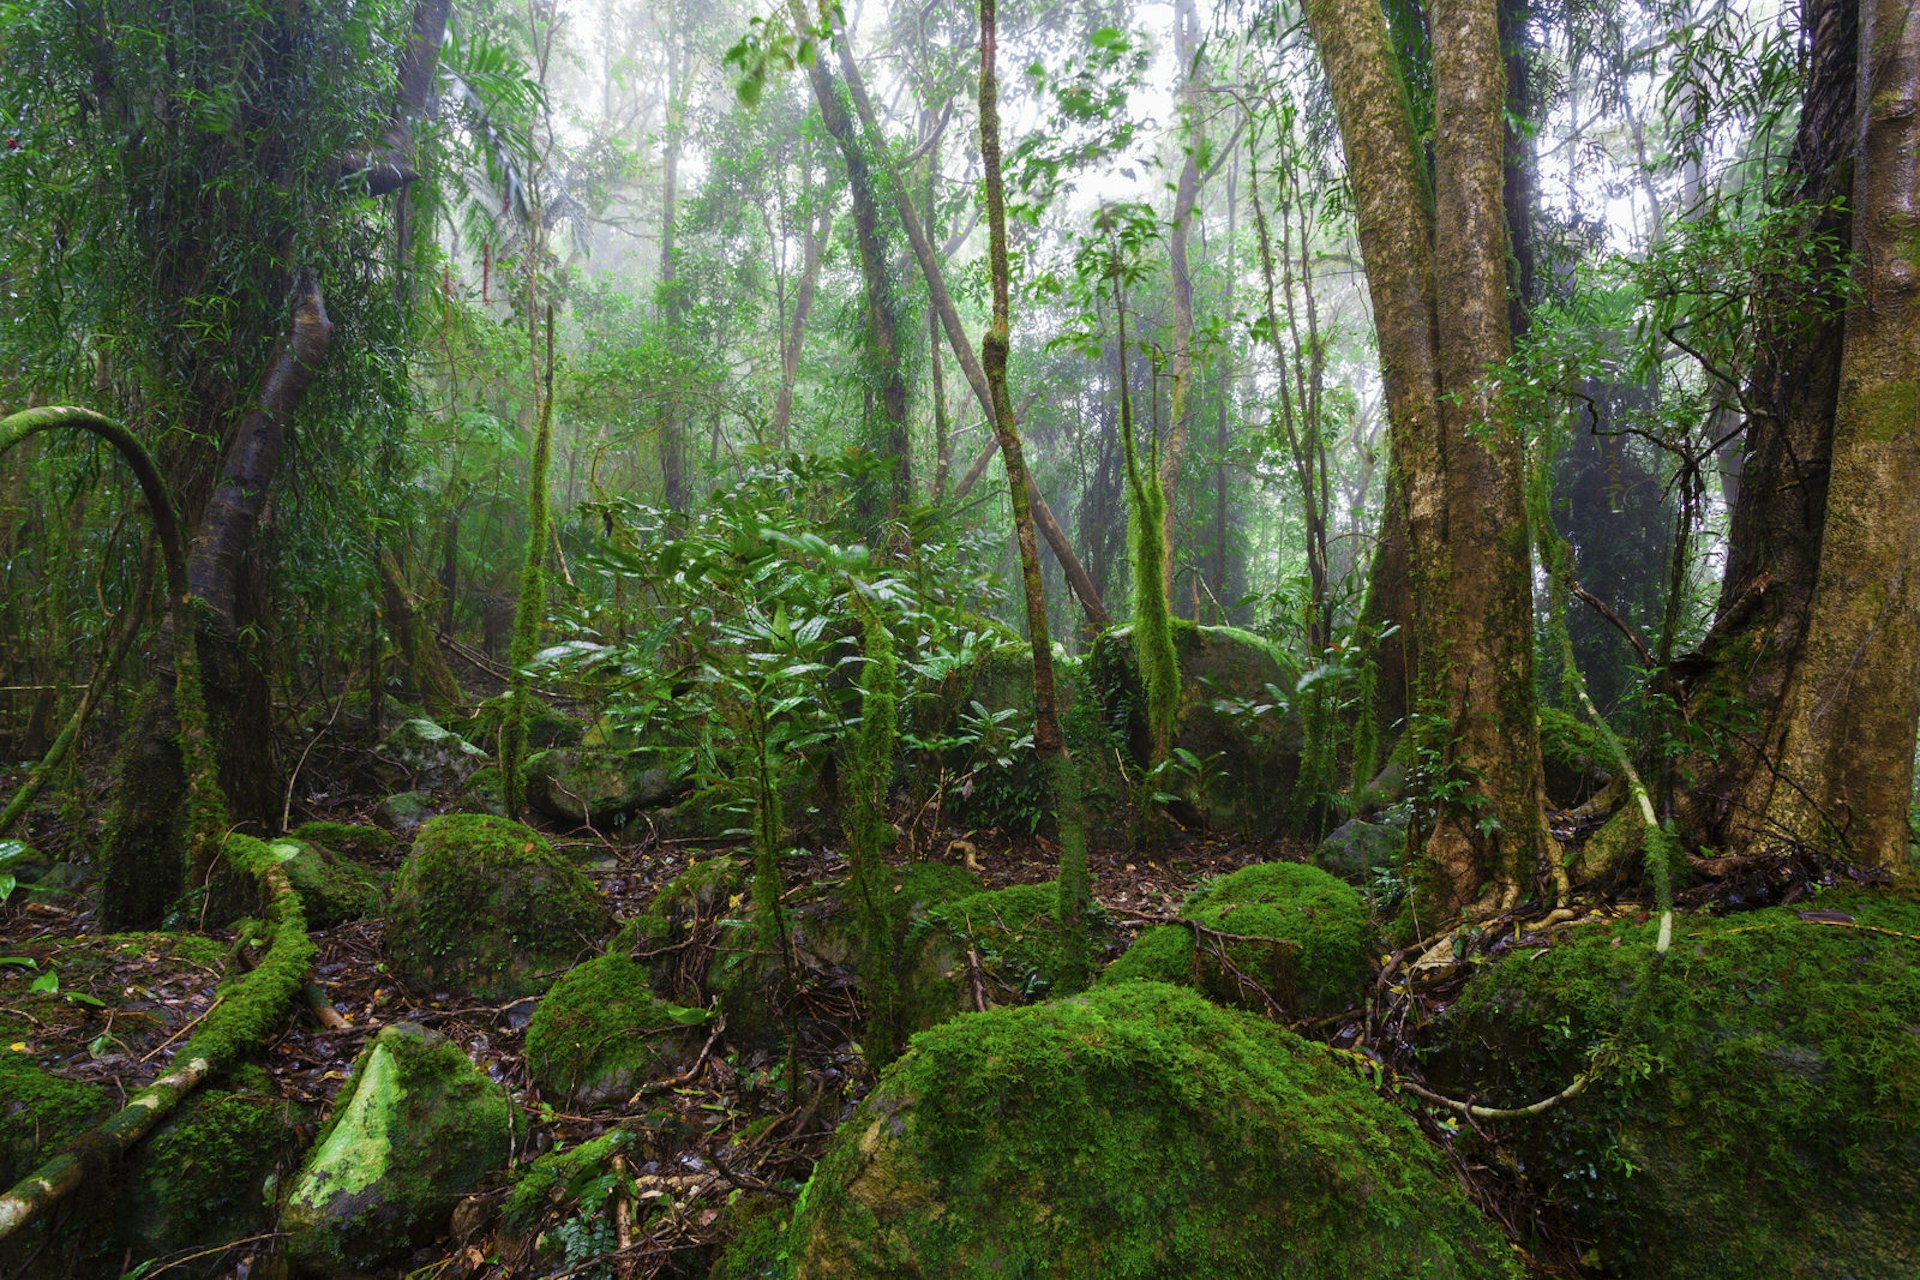 A misty rainforest in Australia.